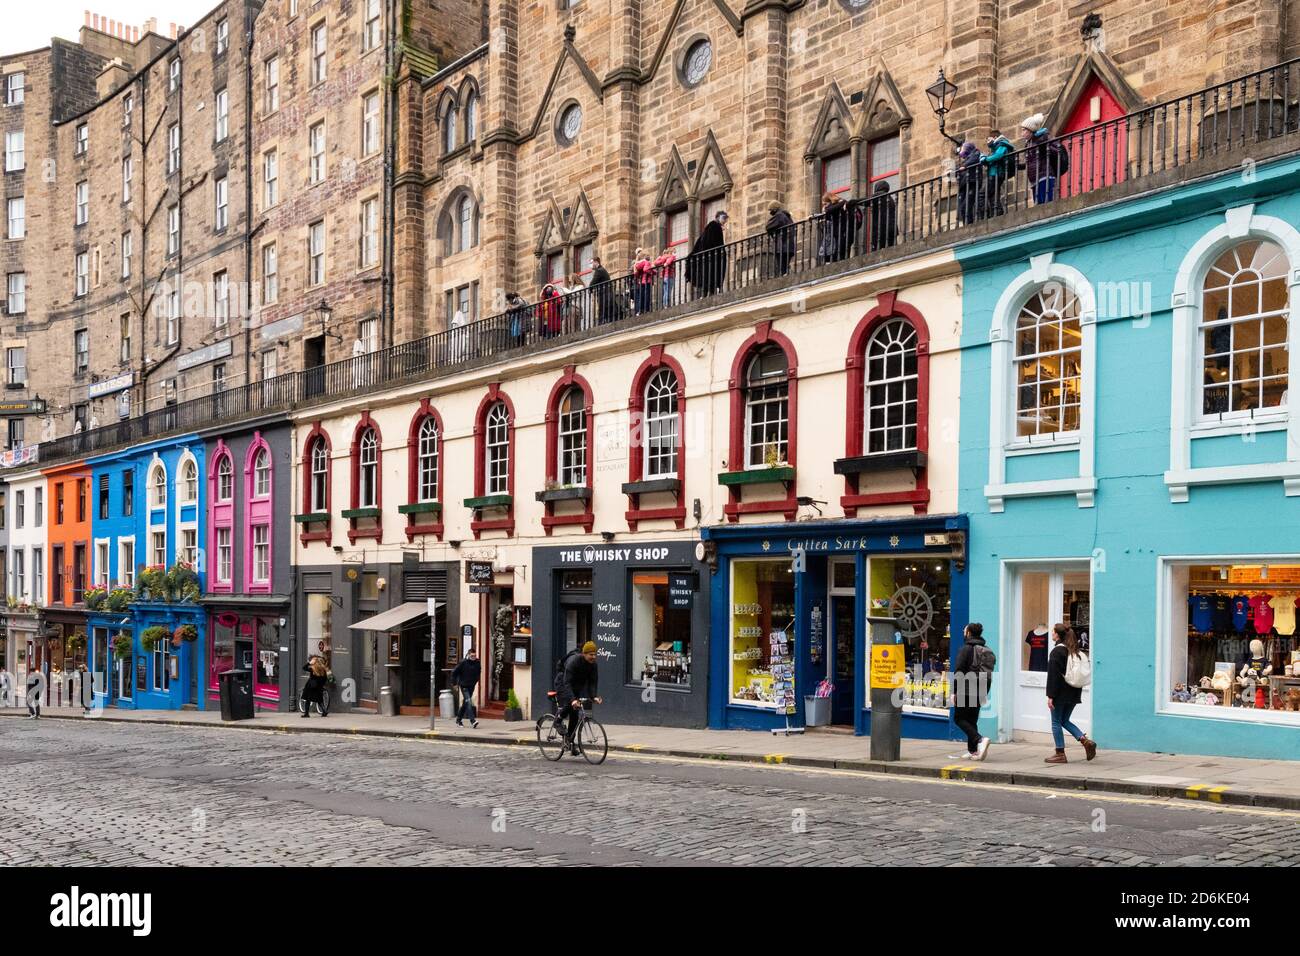 Edinburgh Old Town - colourful painted shops on Victoria Street and West Bow, pedestrianised during coronavirus pandemic, Edinburgh, Scotland, UK Stock Photo